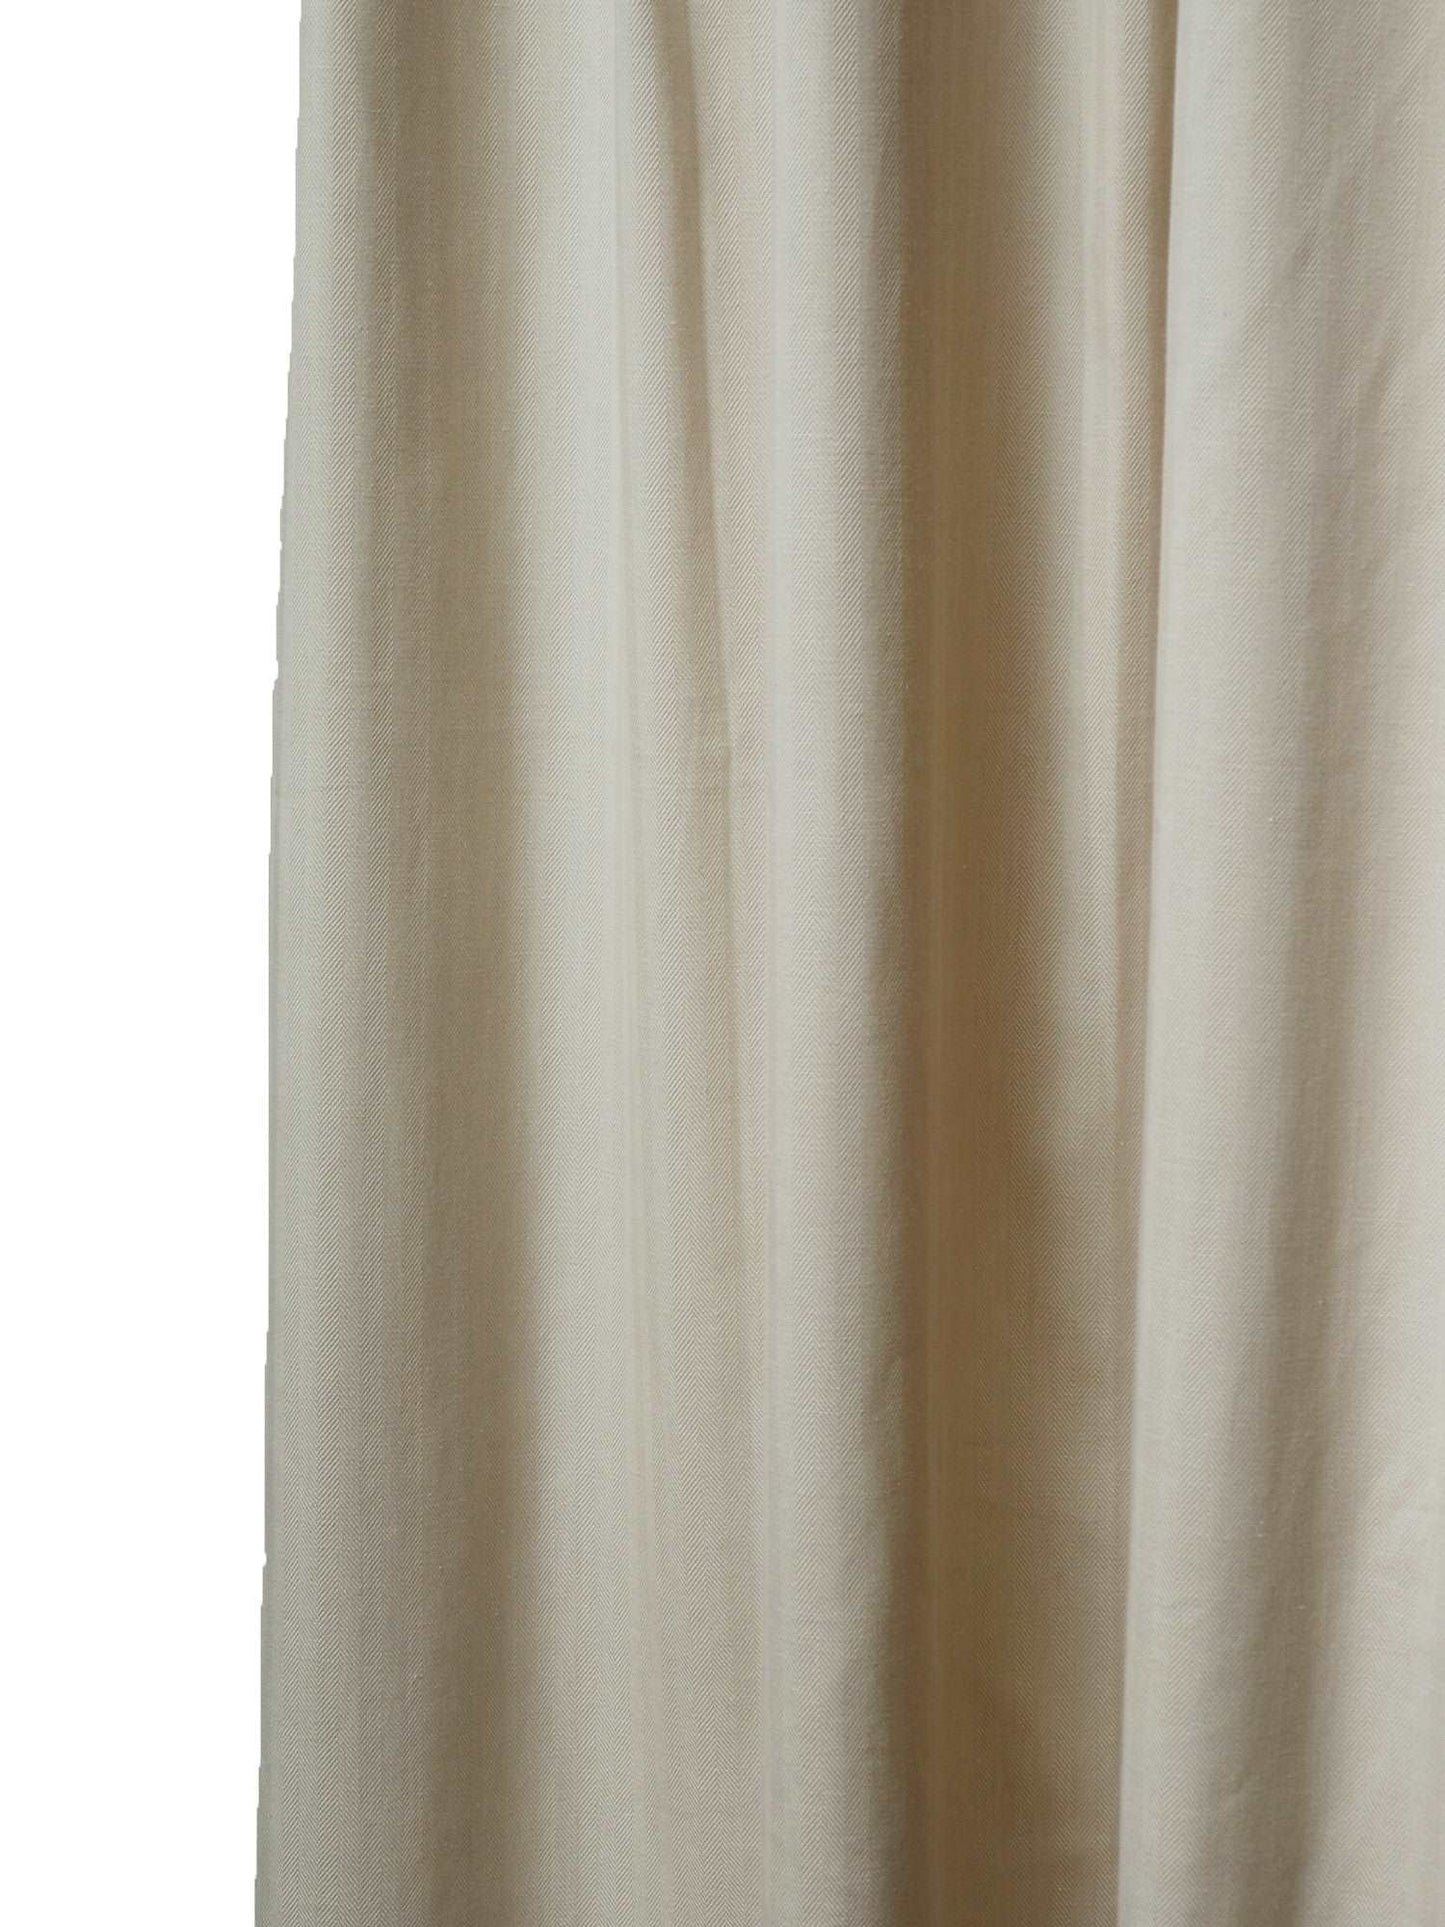 Curtain Cotton Blend Hidden Loop Self Textured Off White - 52" x 90"